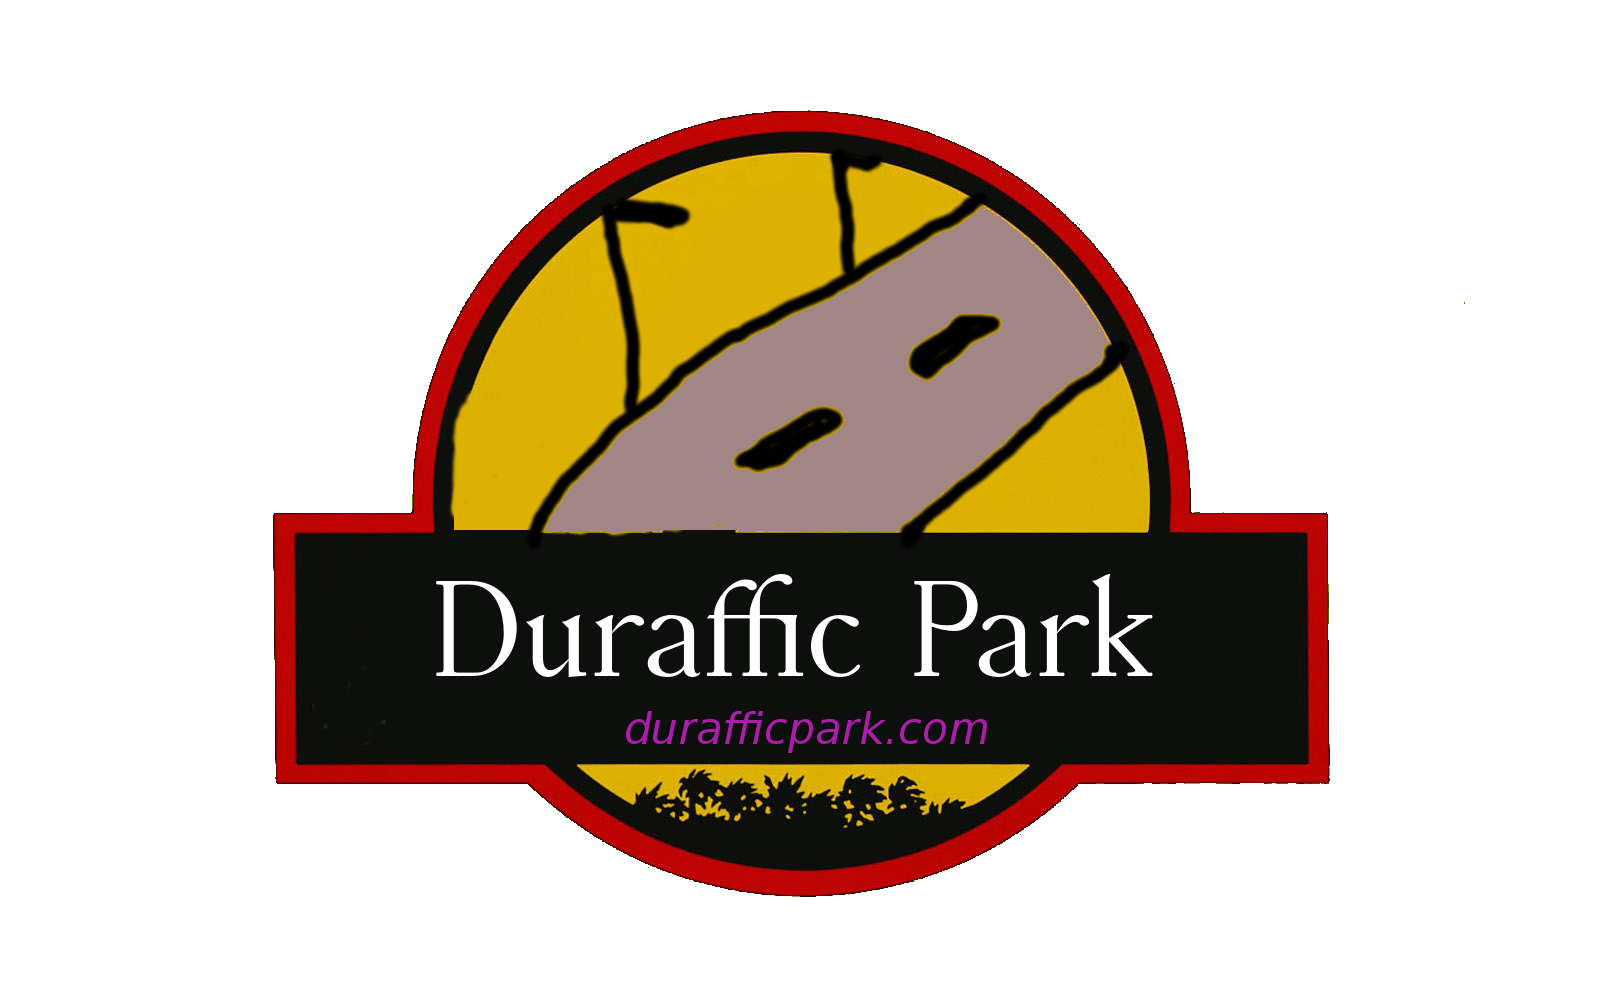 Duraffic Park